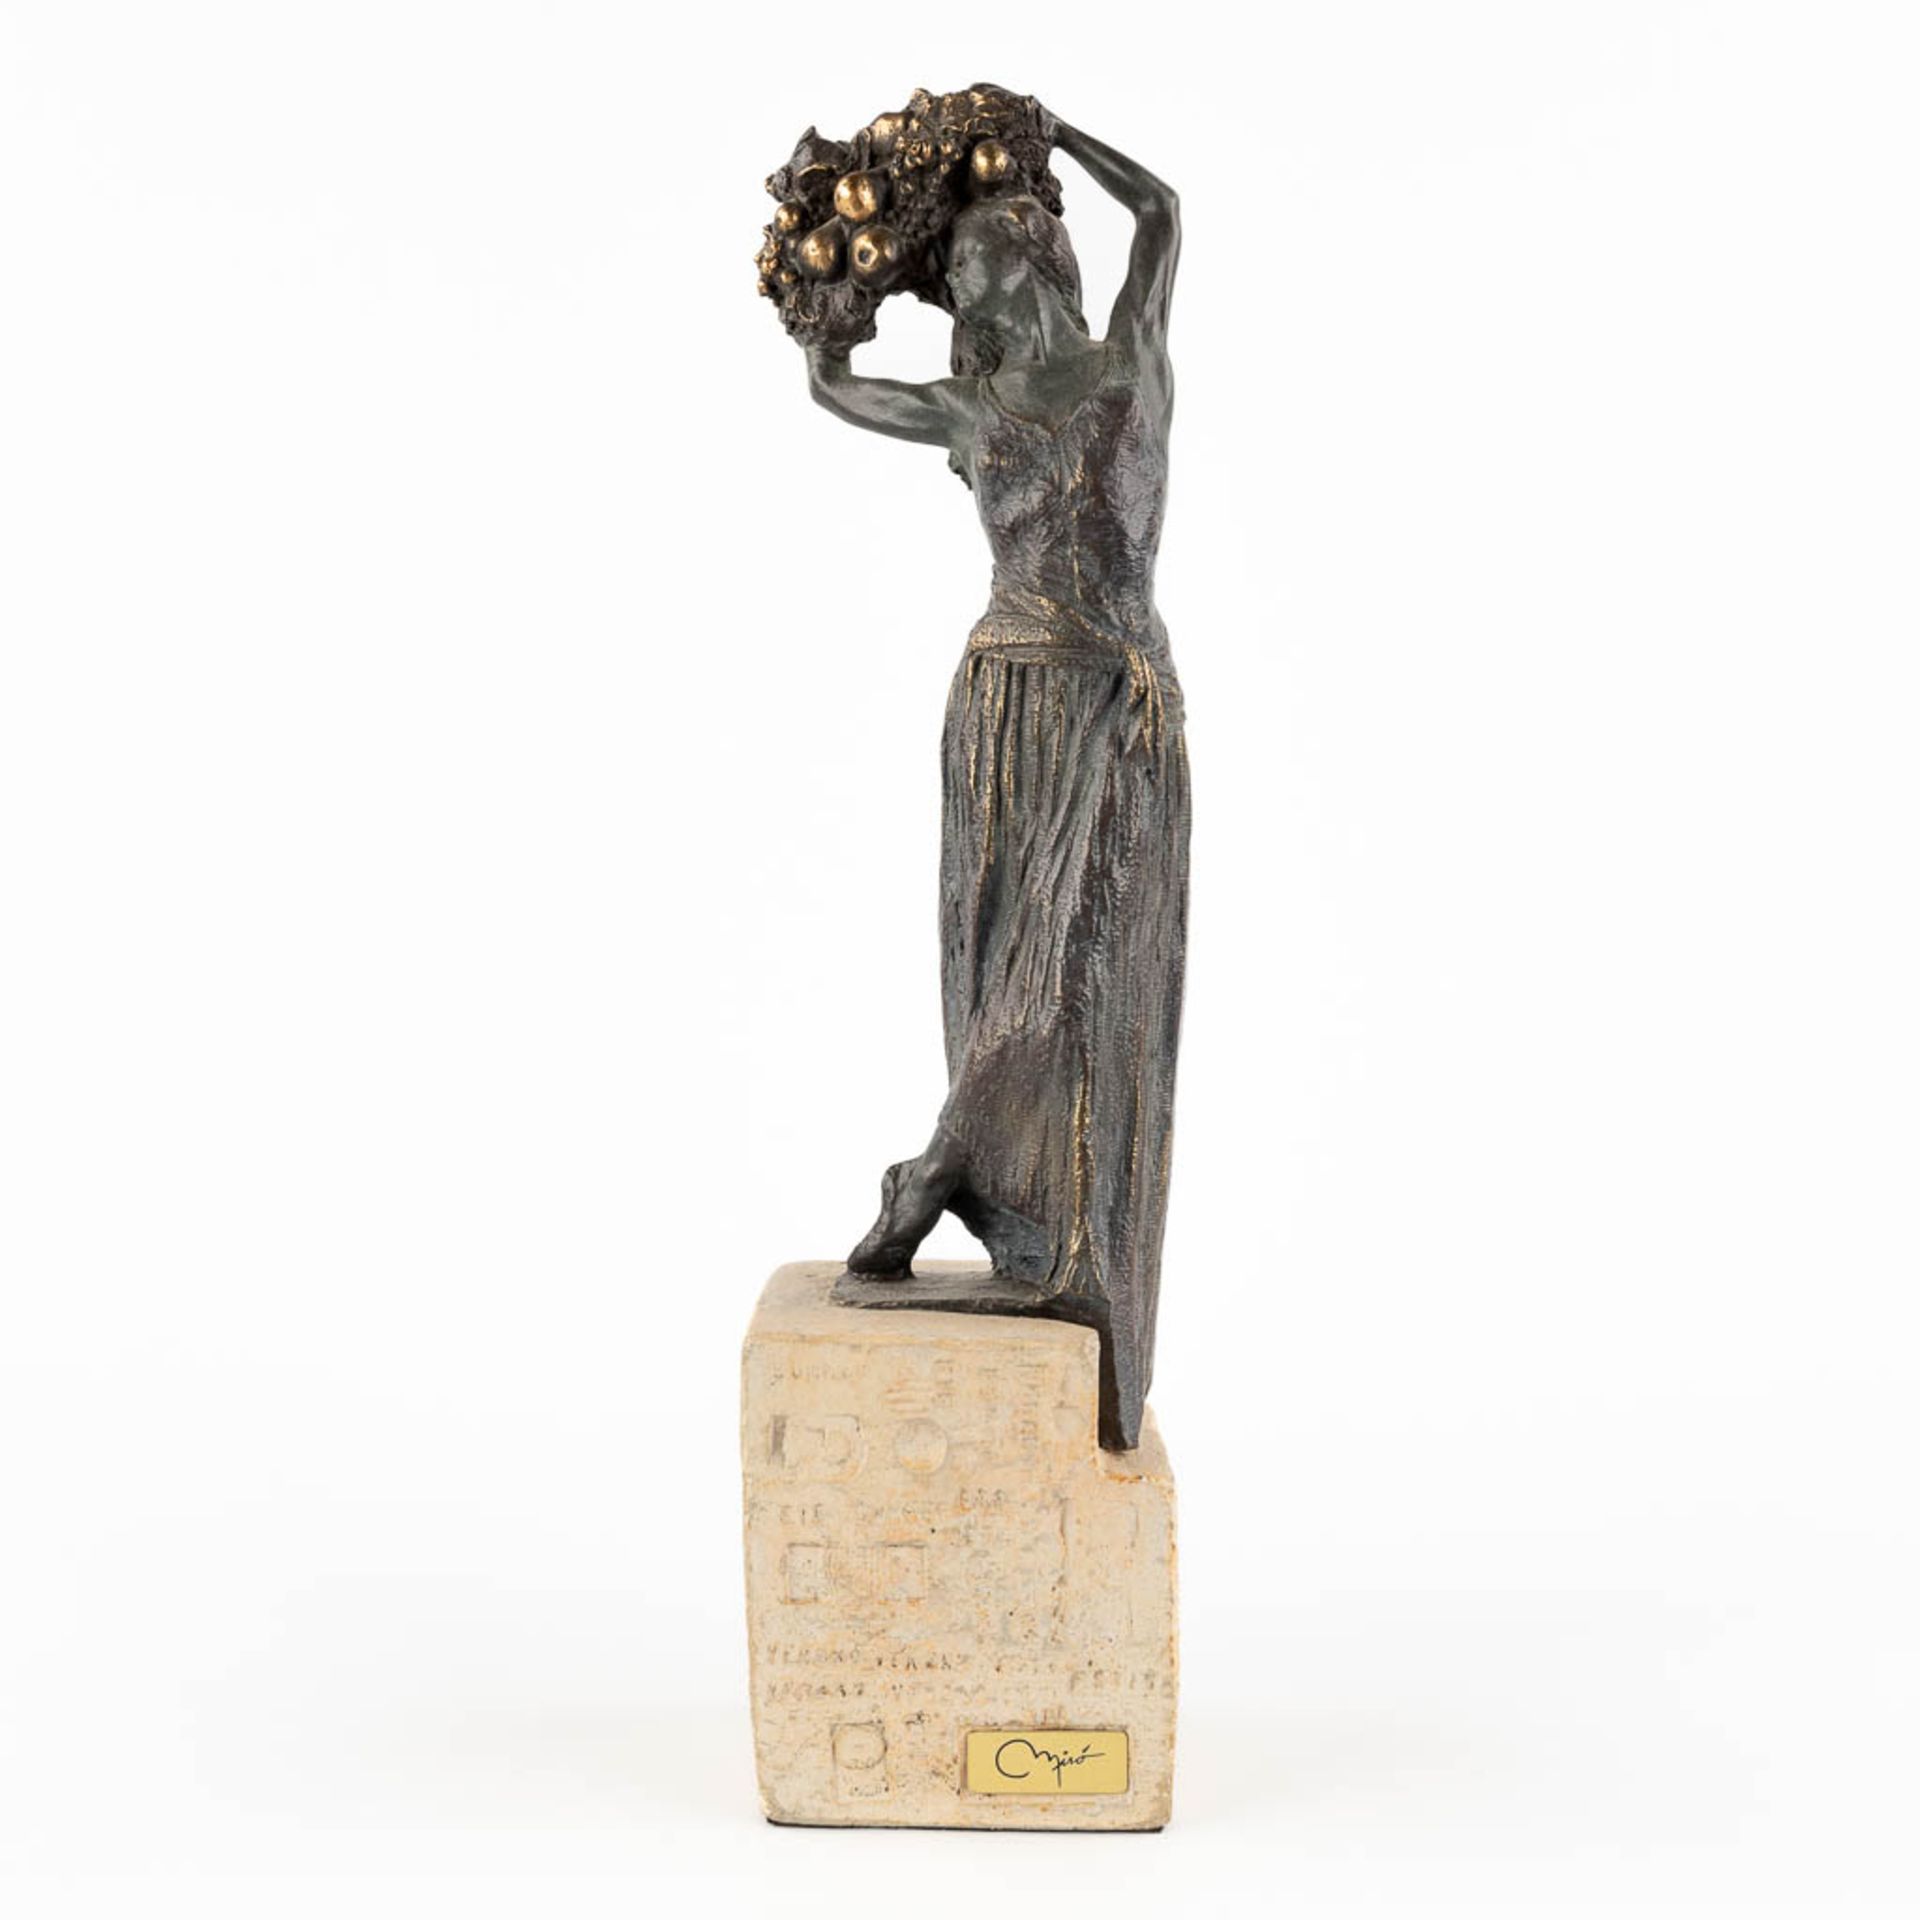 Joan MIRO (1893-1983)(after) 'Verano II' patinated bronze. 271/3999. 1992. (H:24 cm) - Image 3 of 13